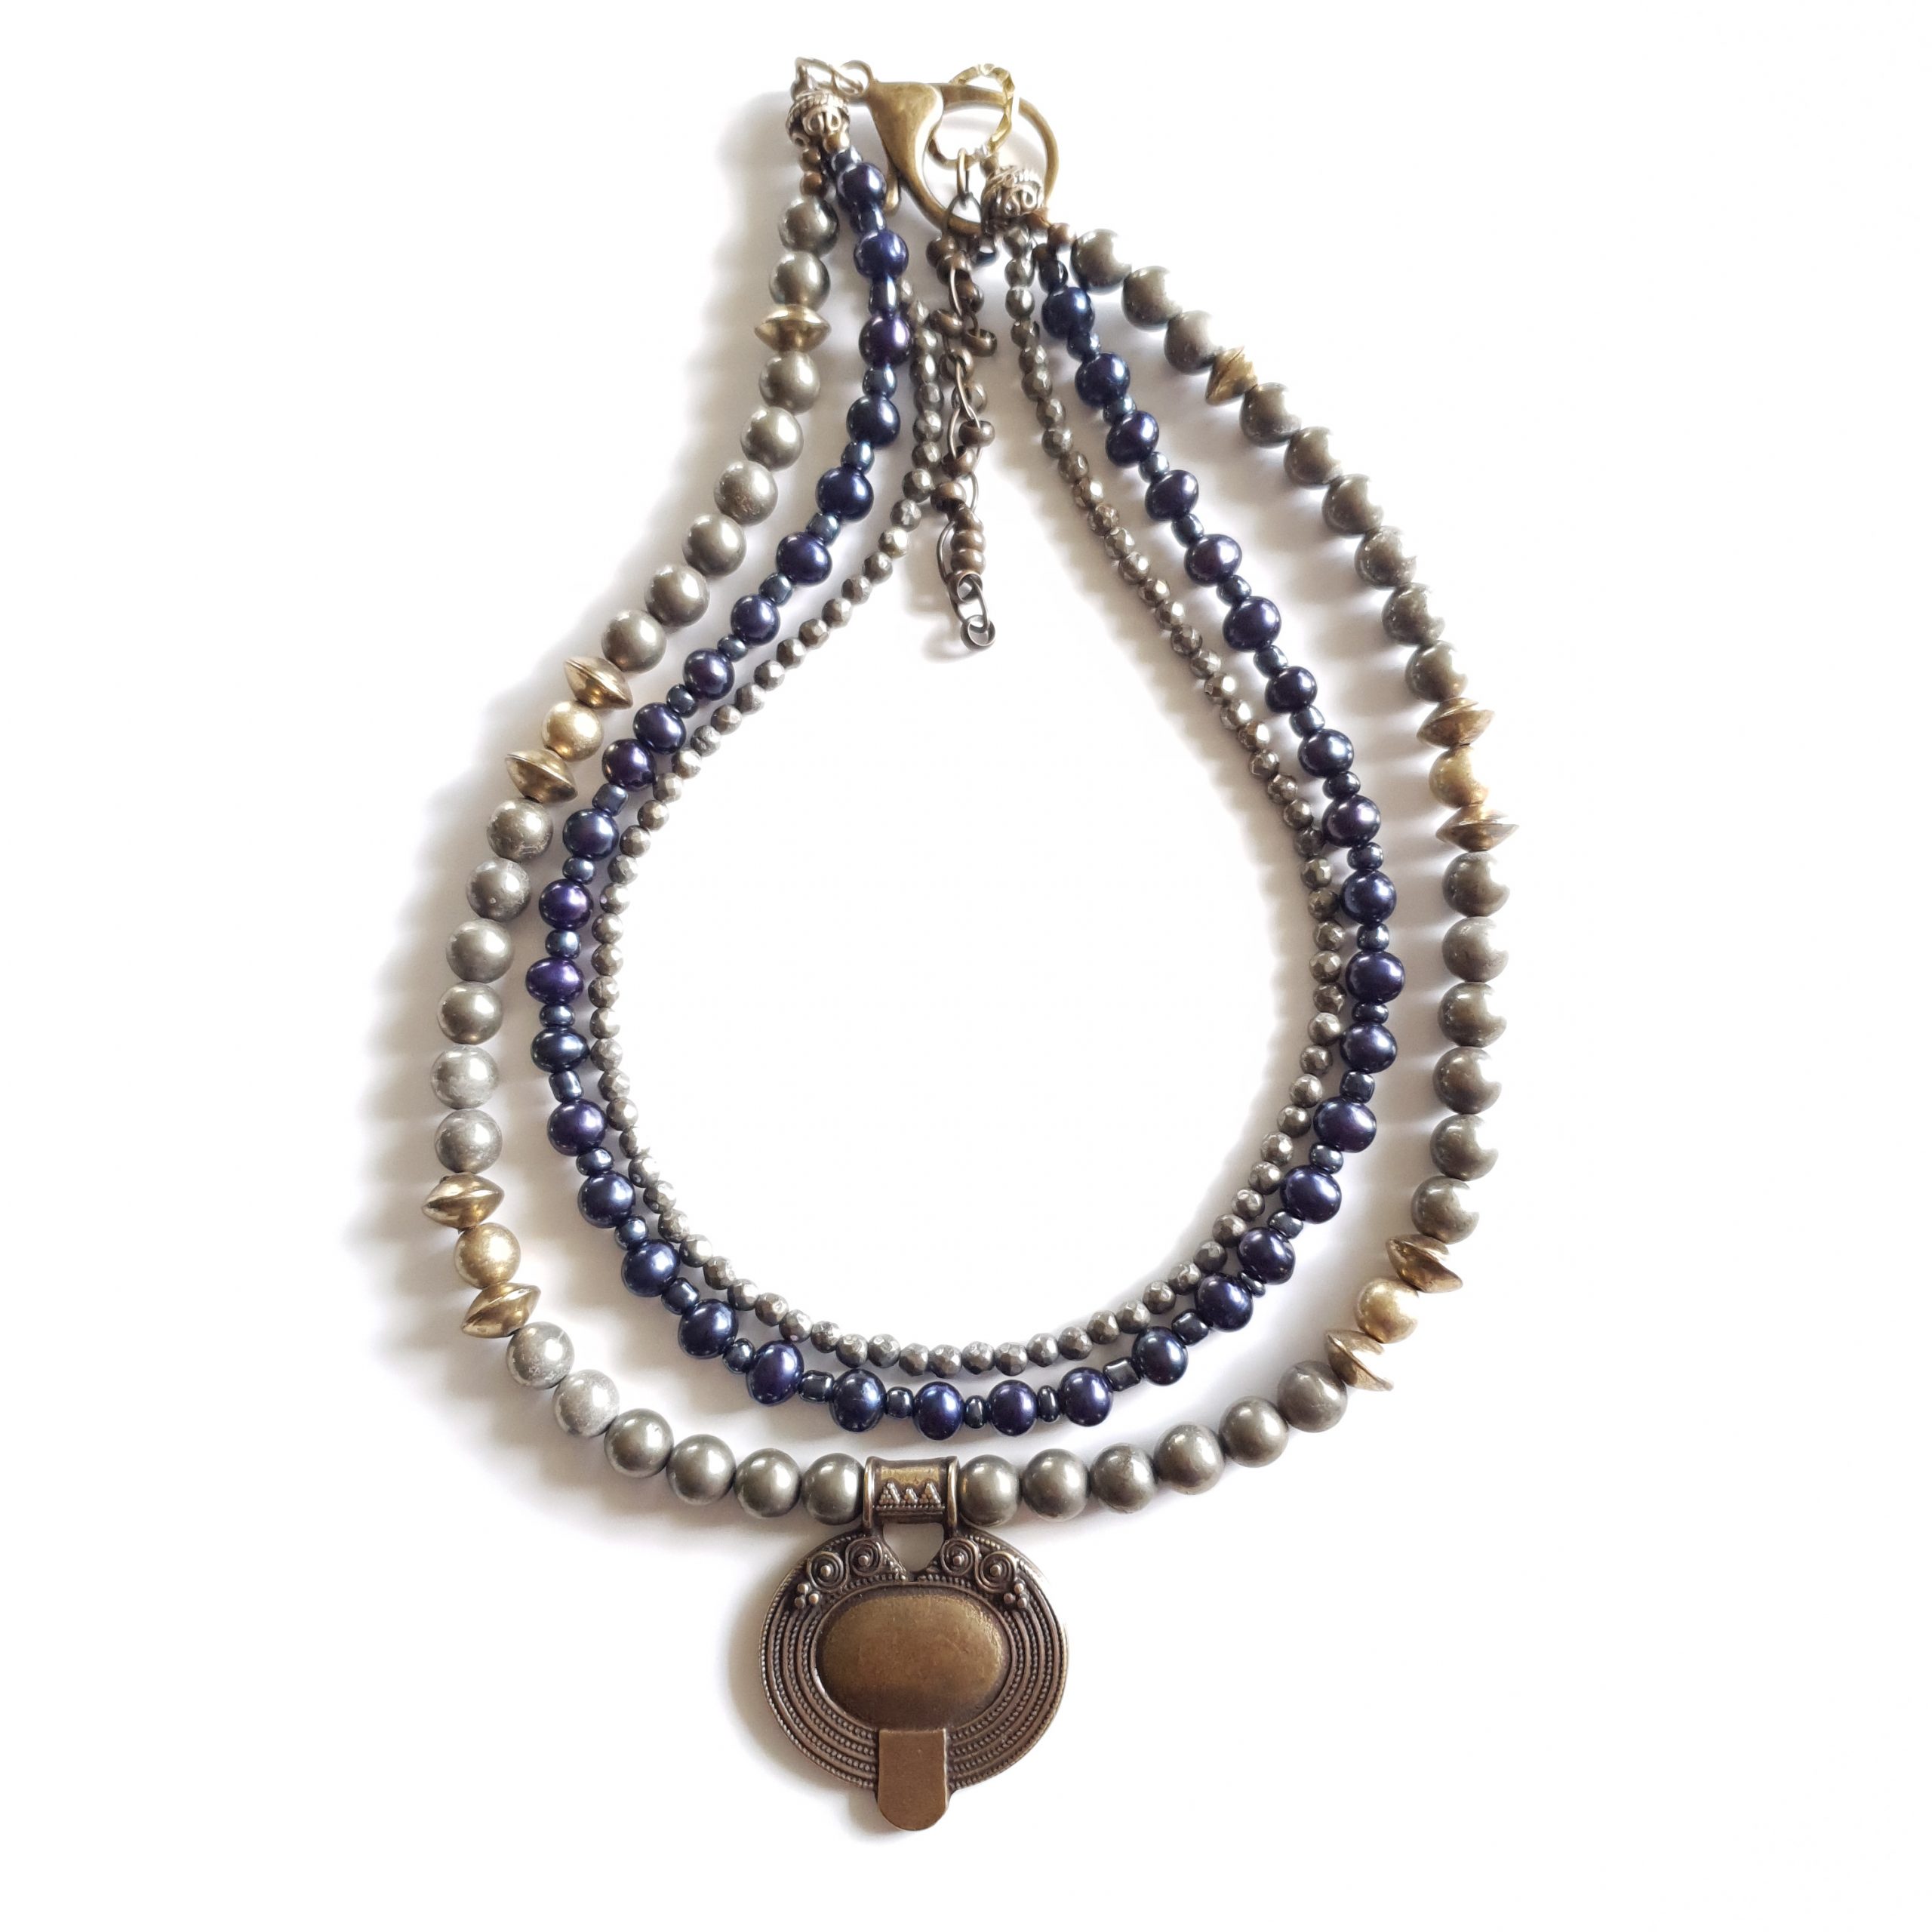 Rajasthan Tribal Pendant with Blue Freshwater Pearls - Bojangles Jewellery